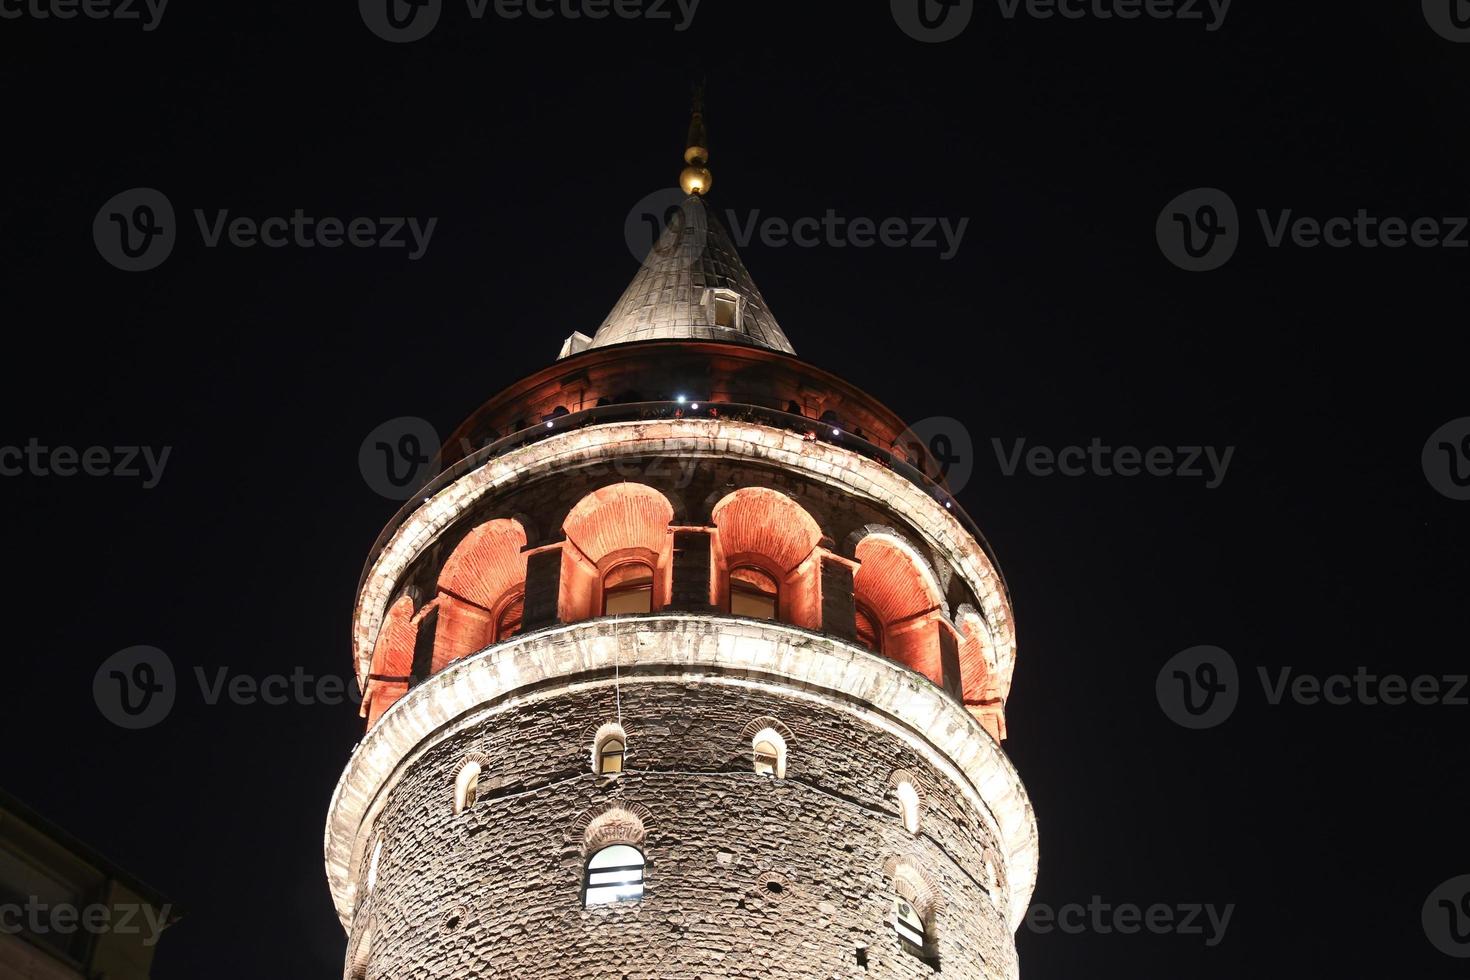 torre di galata a beyoglu, istanbul, turchia foto